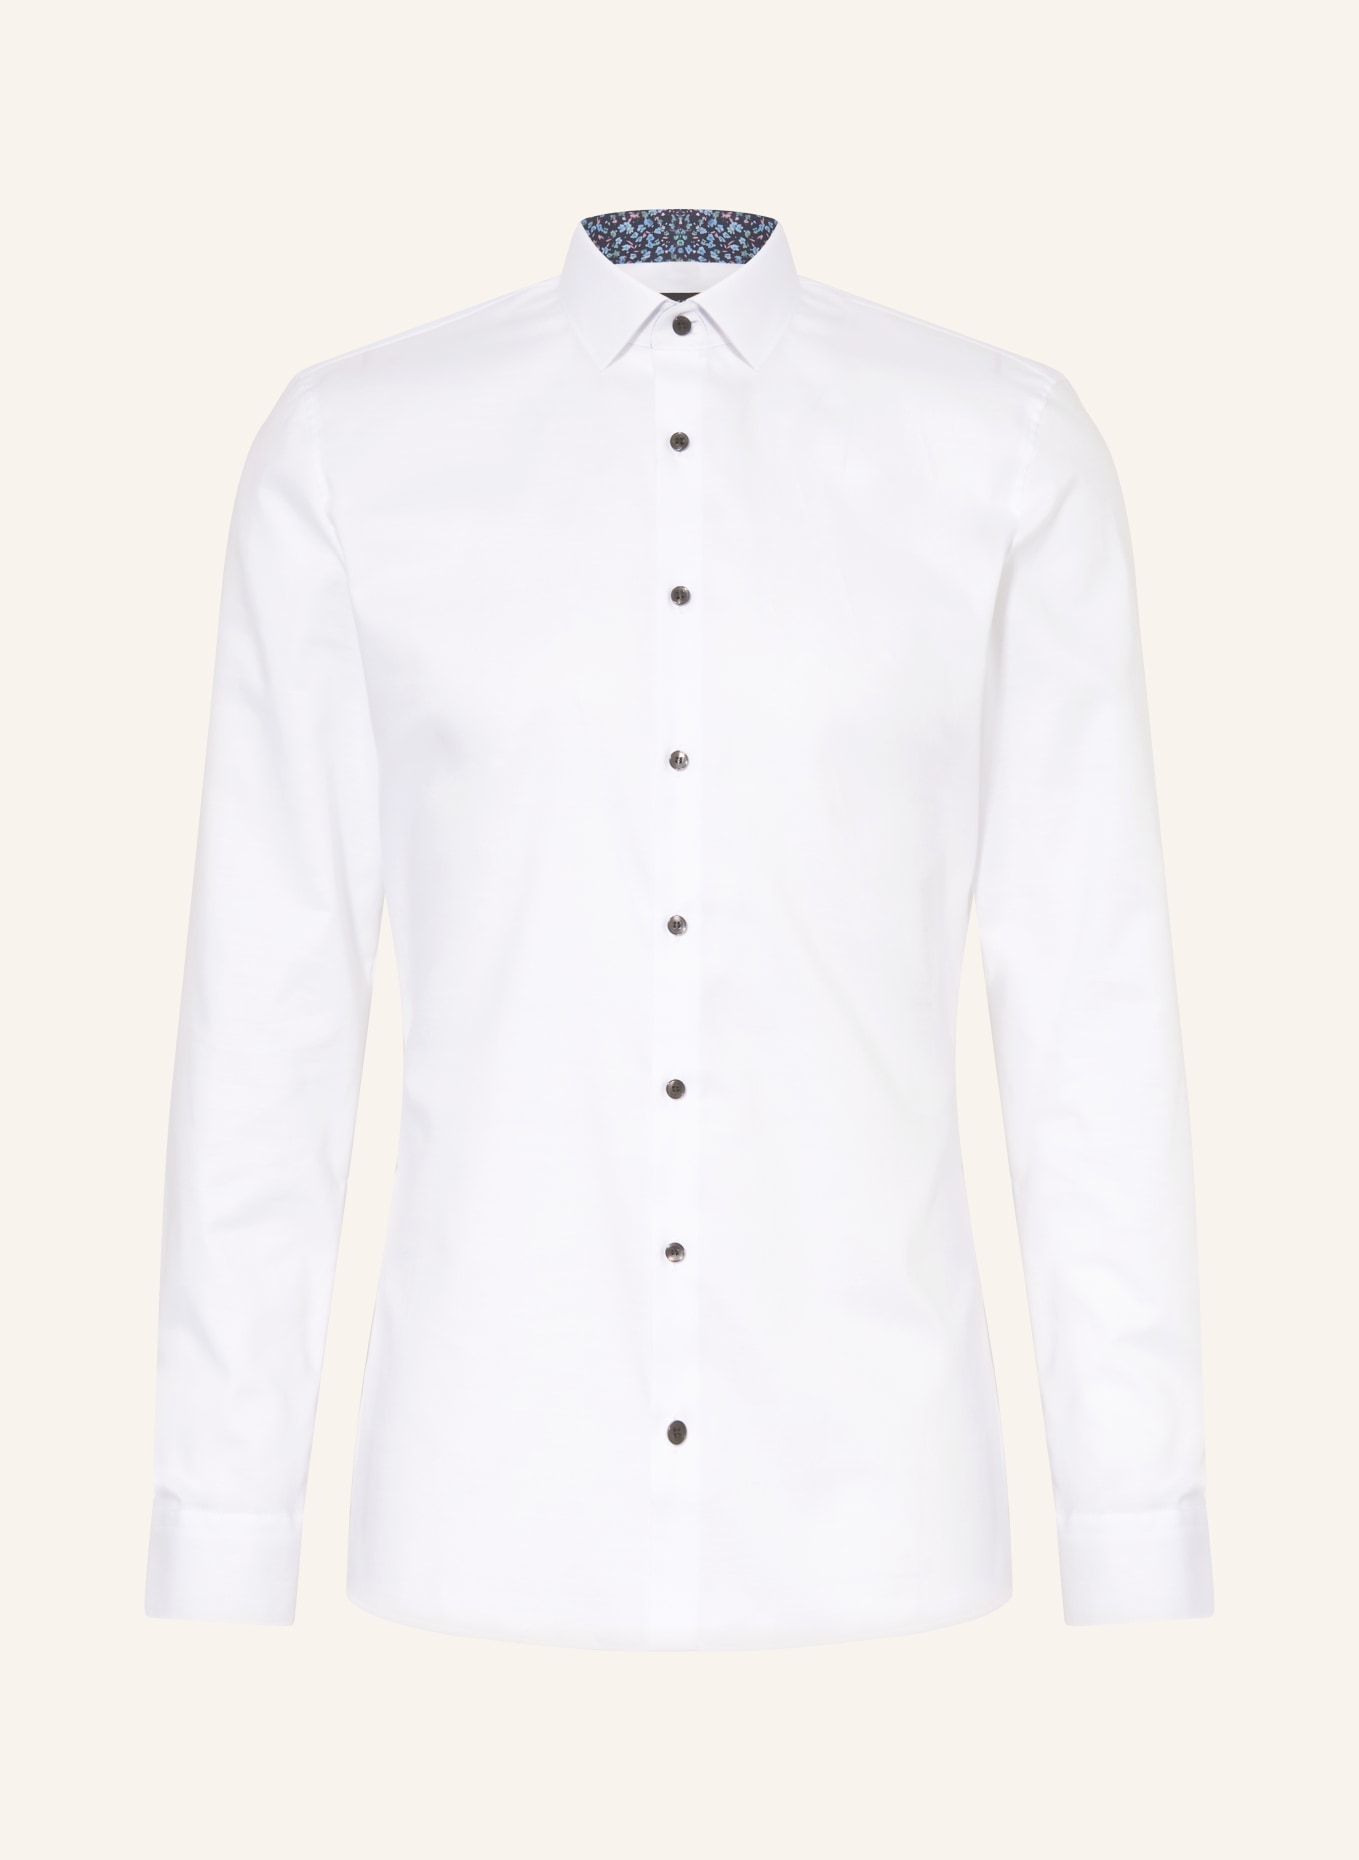 OLYMP Hemd Super Slim Fit, Farbe: WEISS (Bild 1)